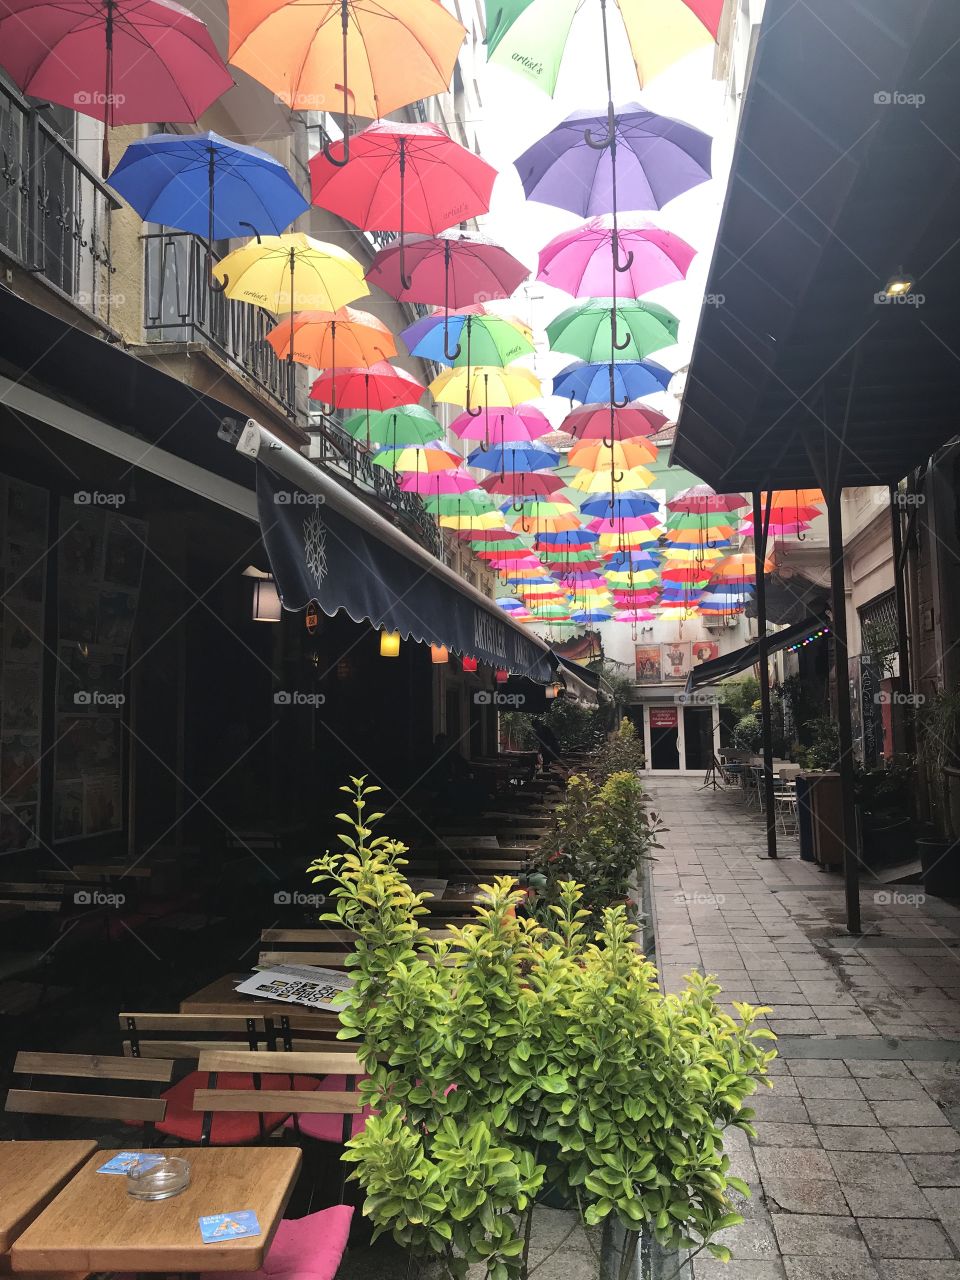 Umbrella street 